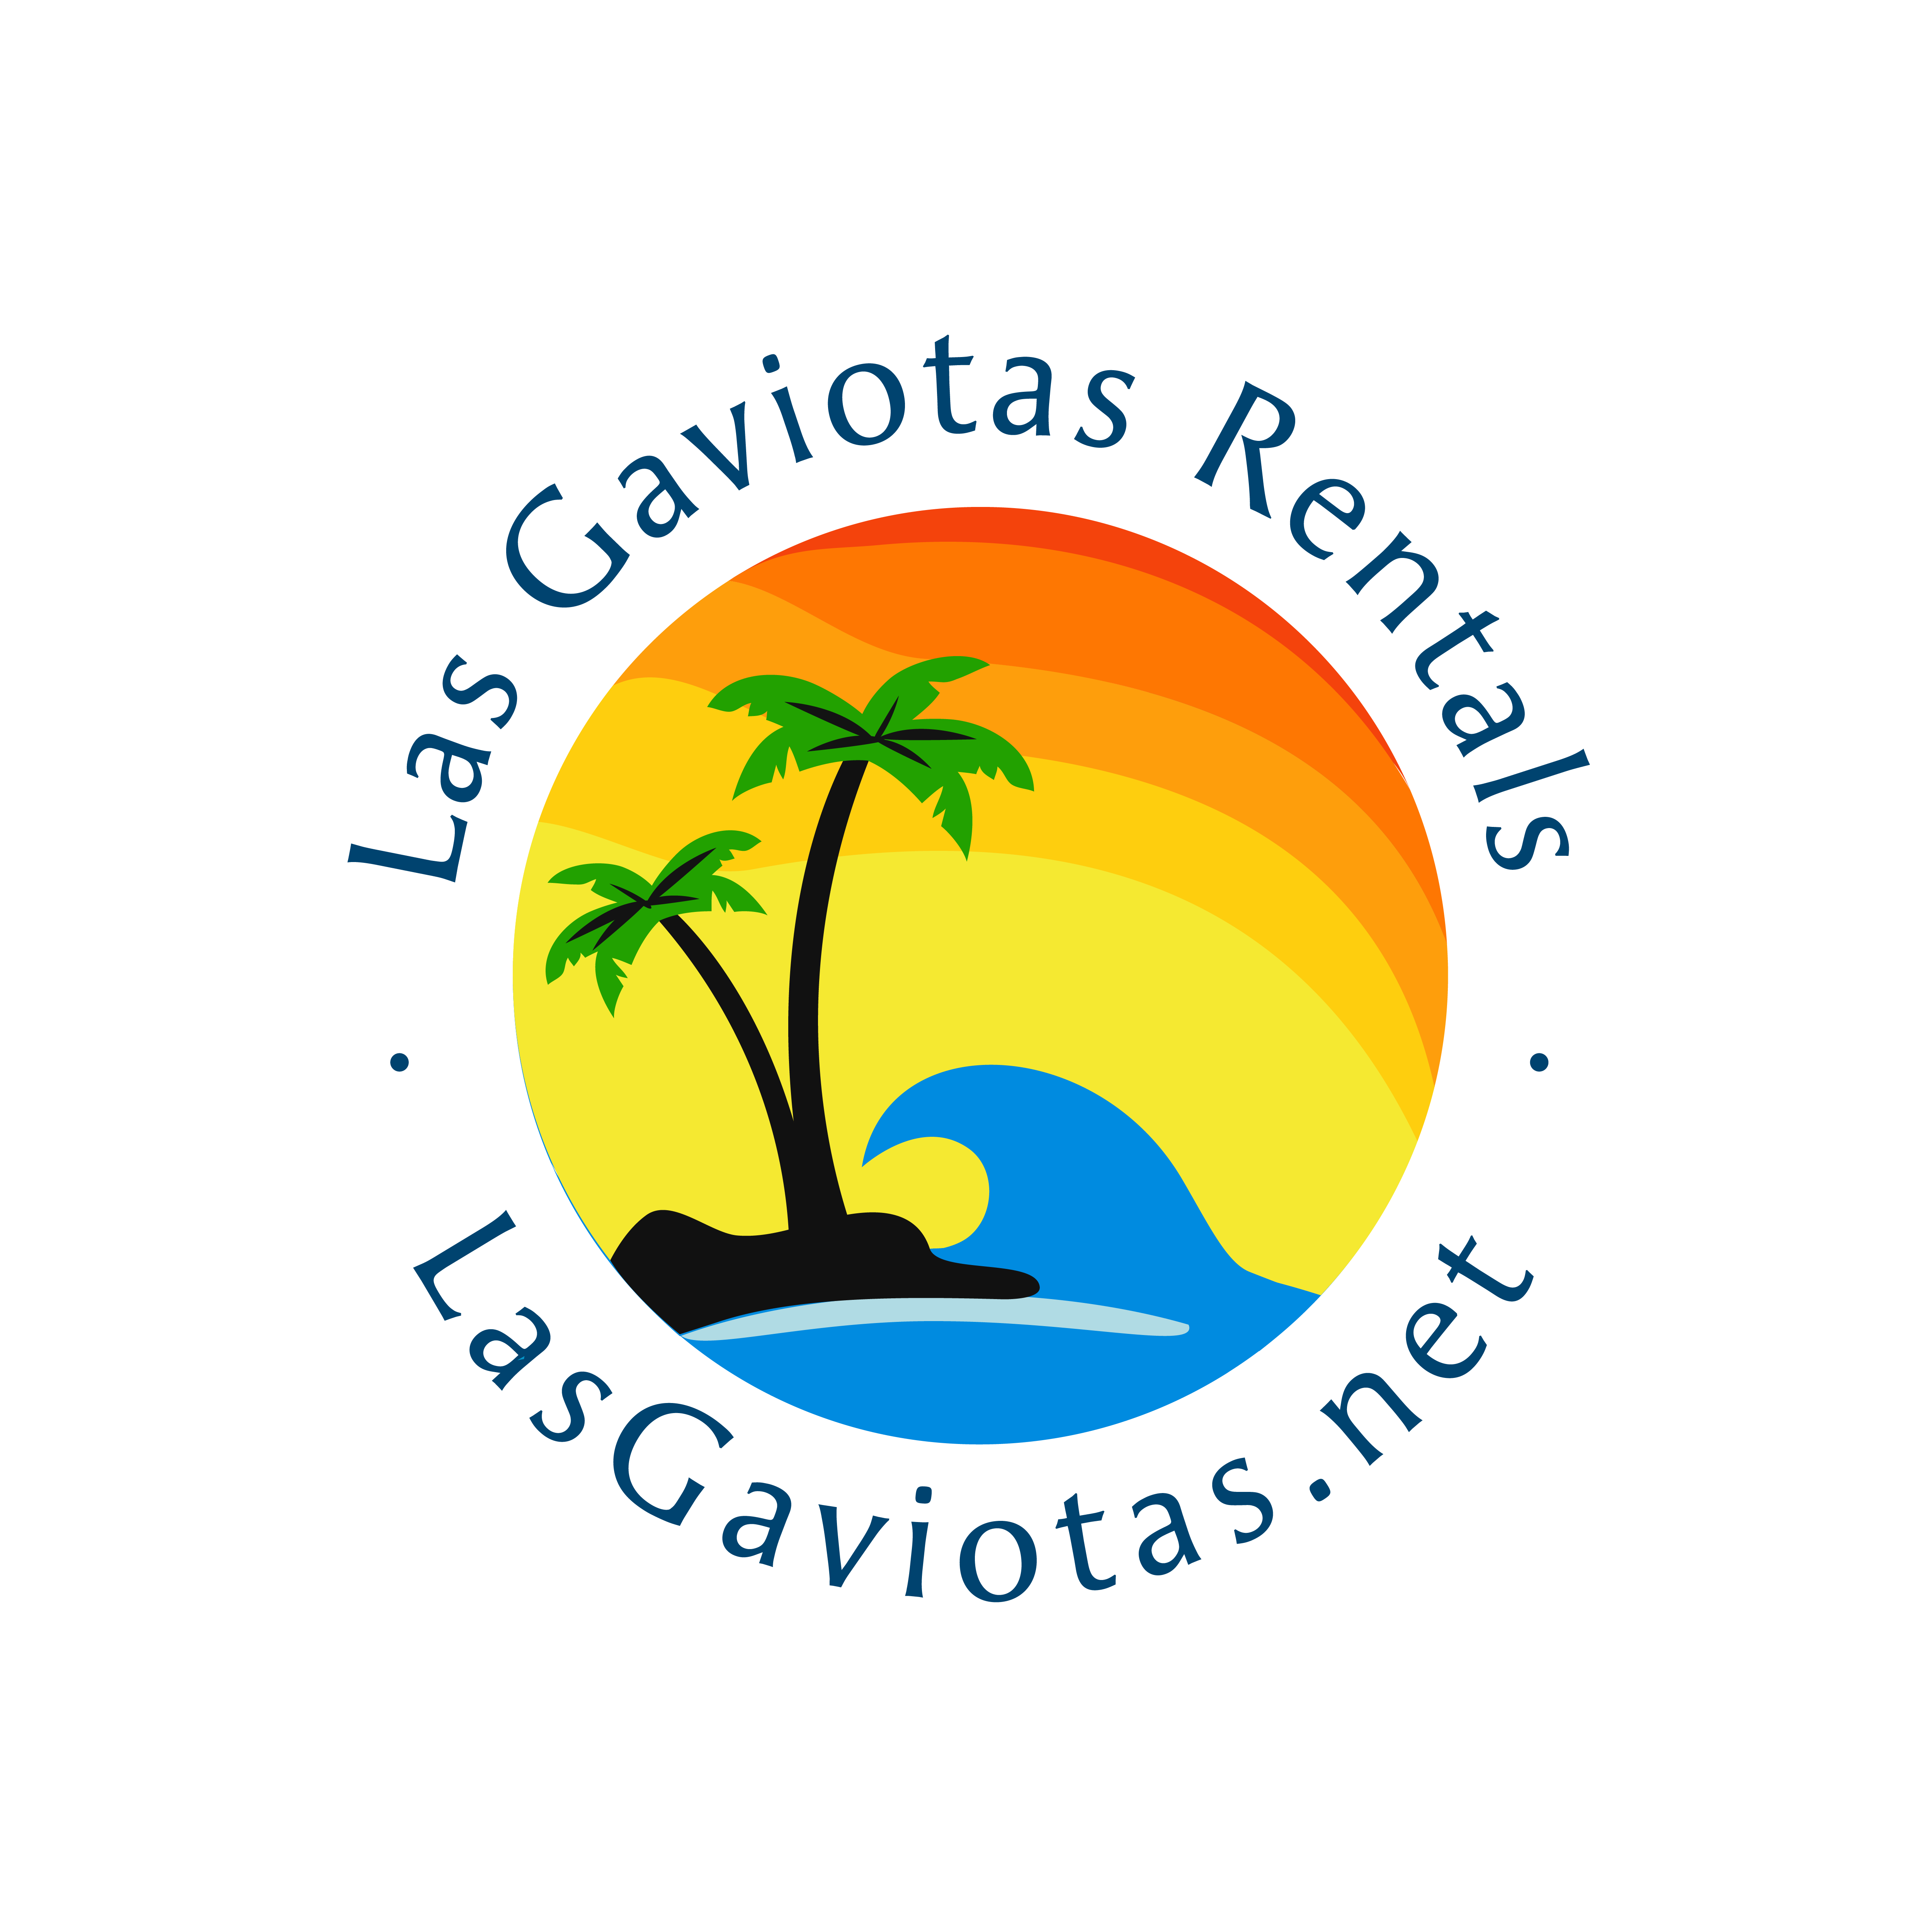 Las Gaviotas